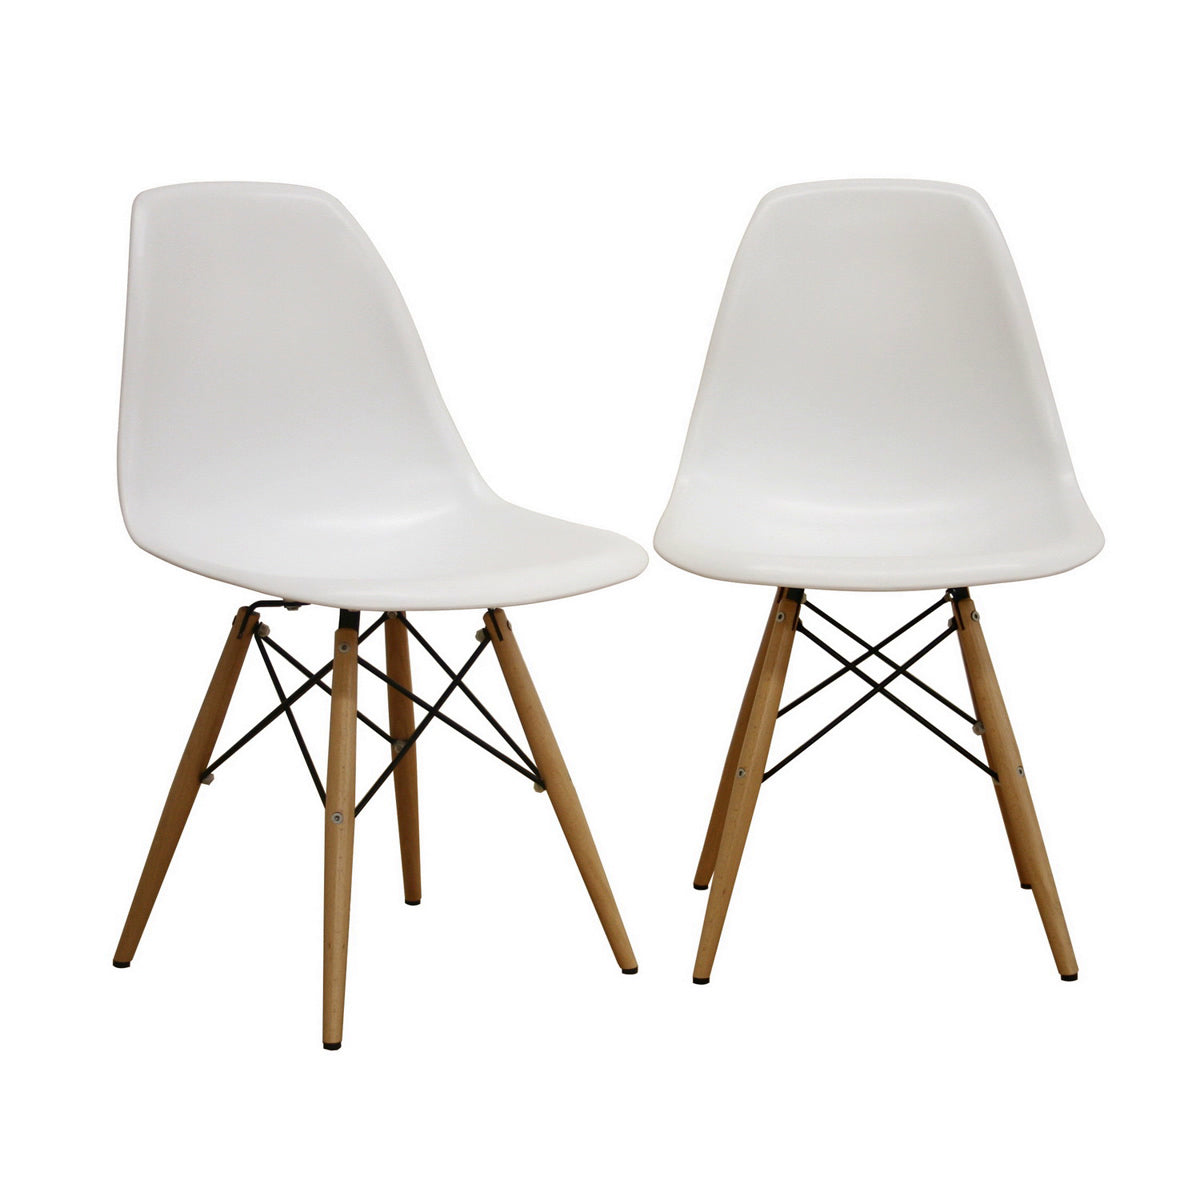 Baxton Studio Azzo White Plastic Mid-Century Modern Shell Chair  (Set of 2) Baxton Studio-dining chair-Minimal And Modern - 2